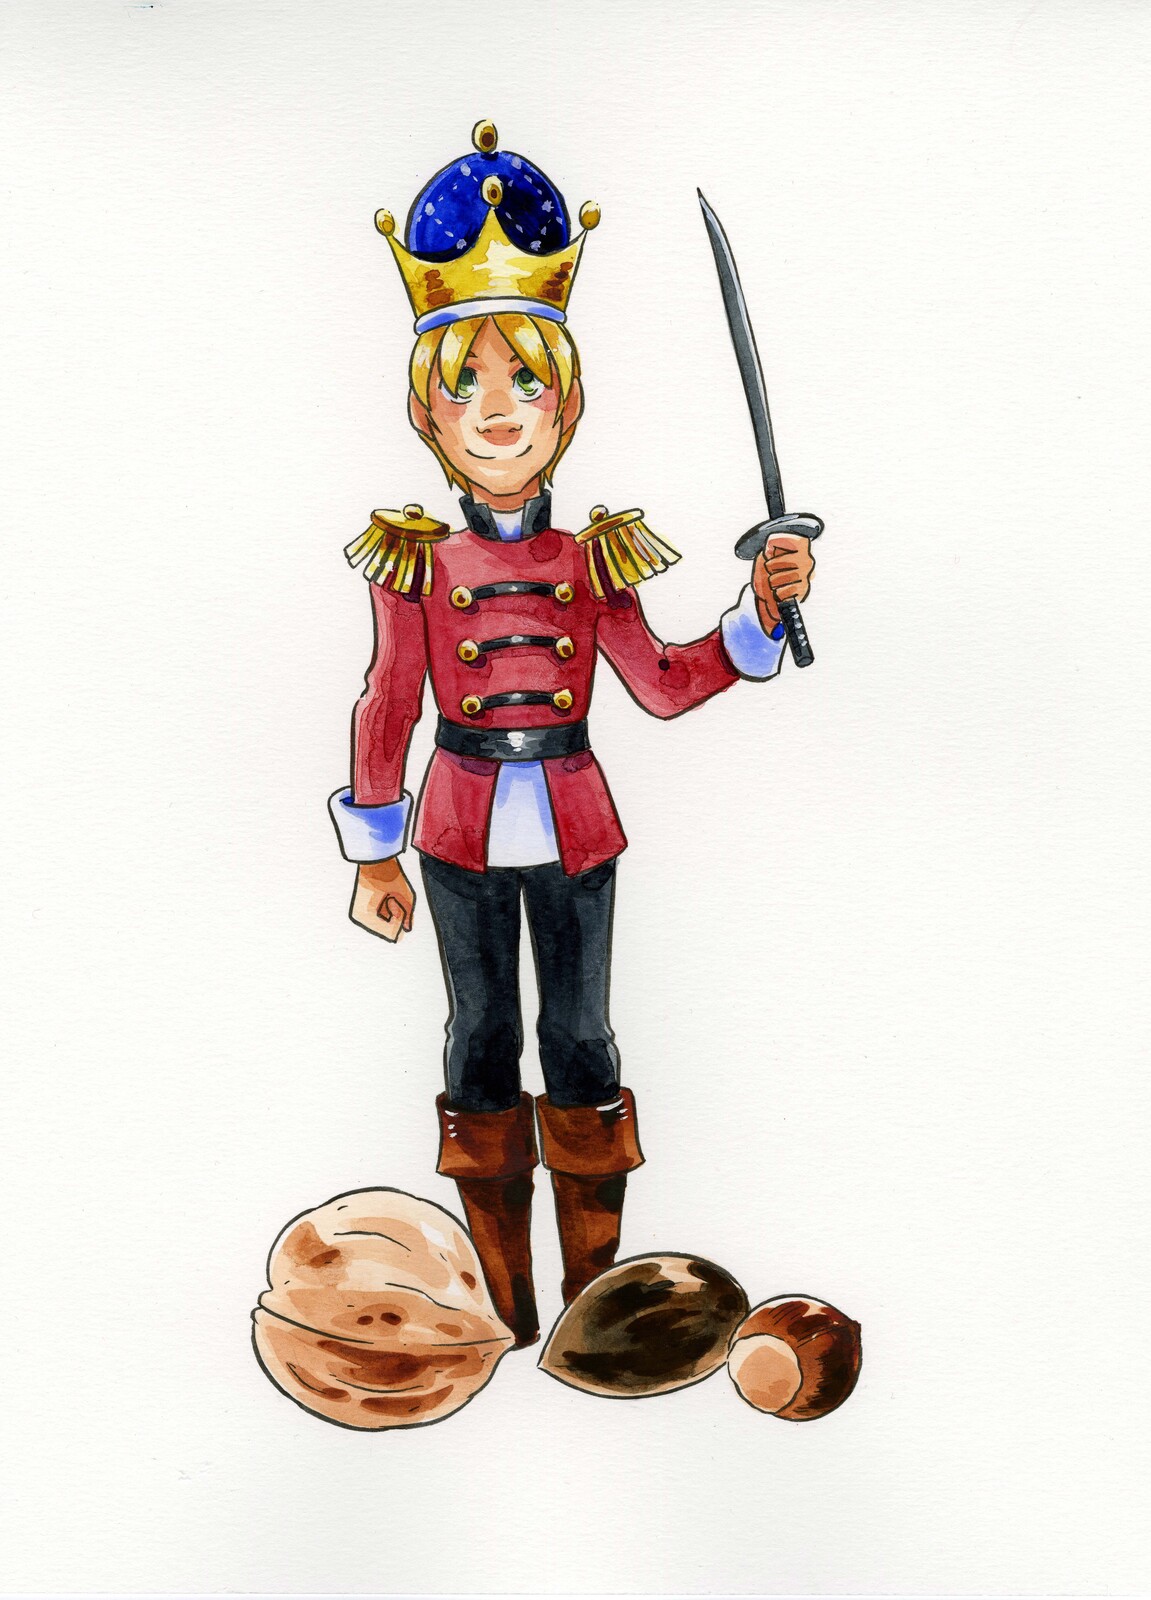 Papercraftmas Day 8: The Nutcracker Prince- printable watercolor illustration
